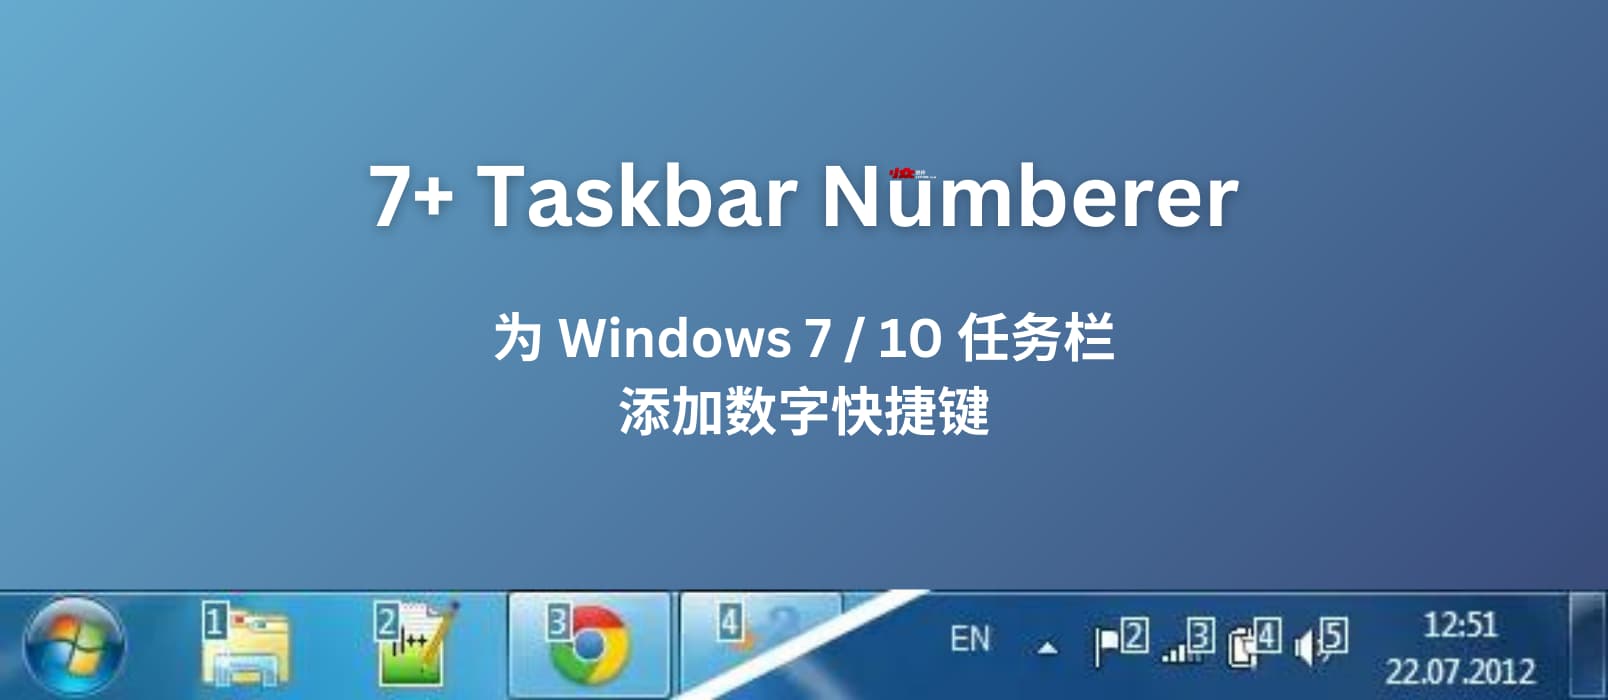 7+ Taskbar Numberer - 为 Windows 任务栏添加数字快捷键，适合语音识别与快捷键用户